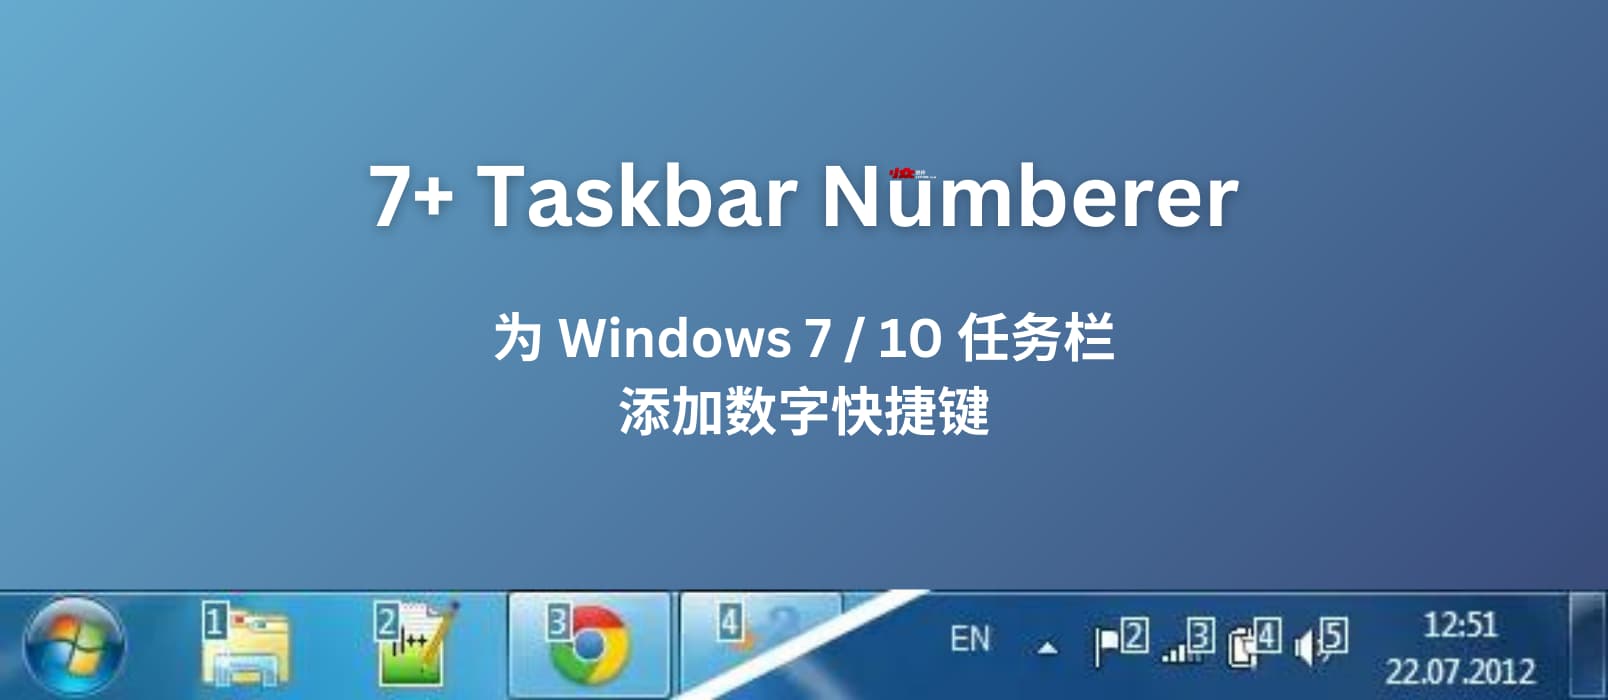 7+ Taskbar Numberer - 为 Windows 任务栏添加数字快捷键，适合语音识别与快捷键用户